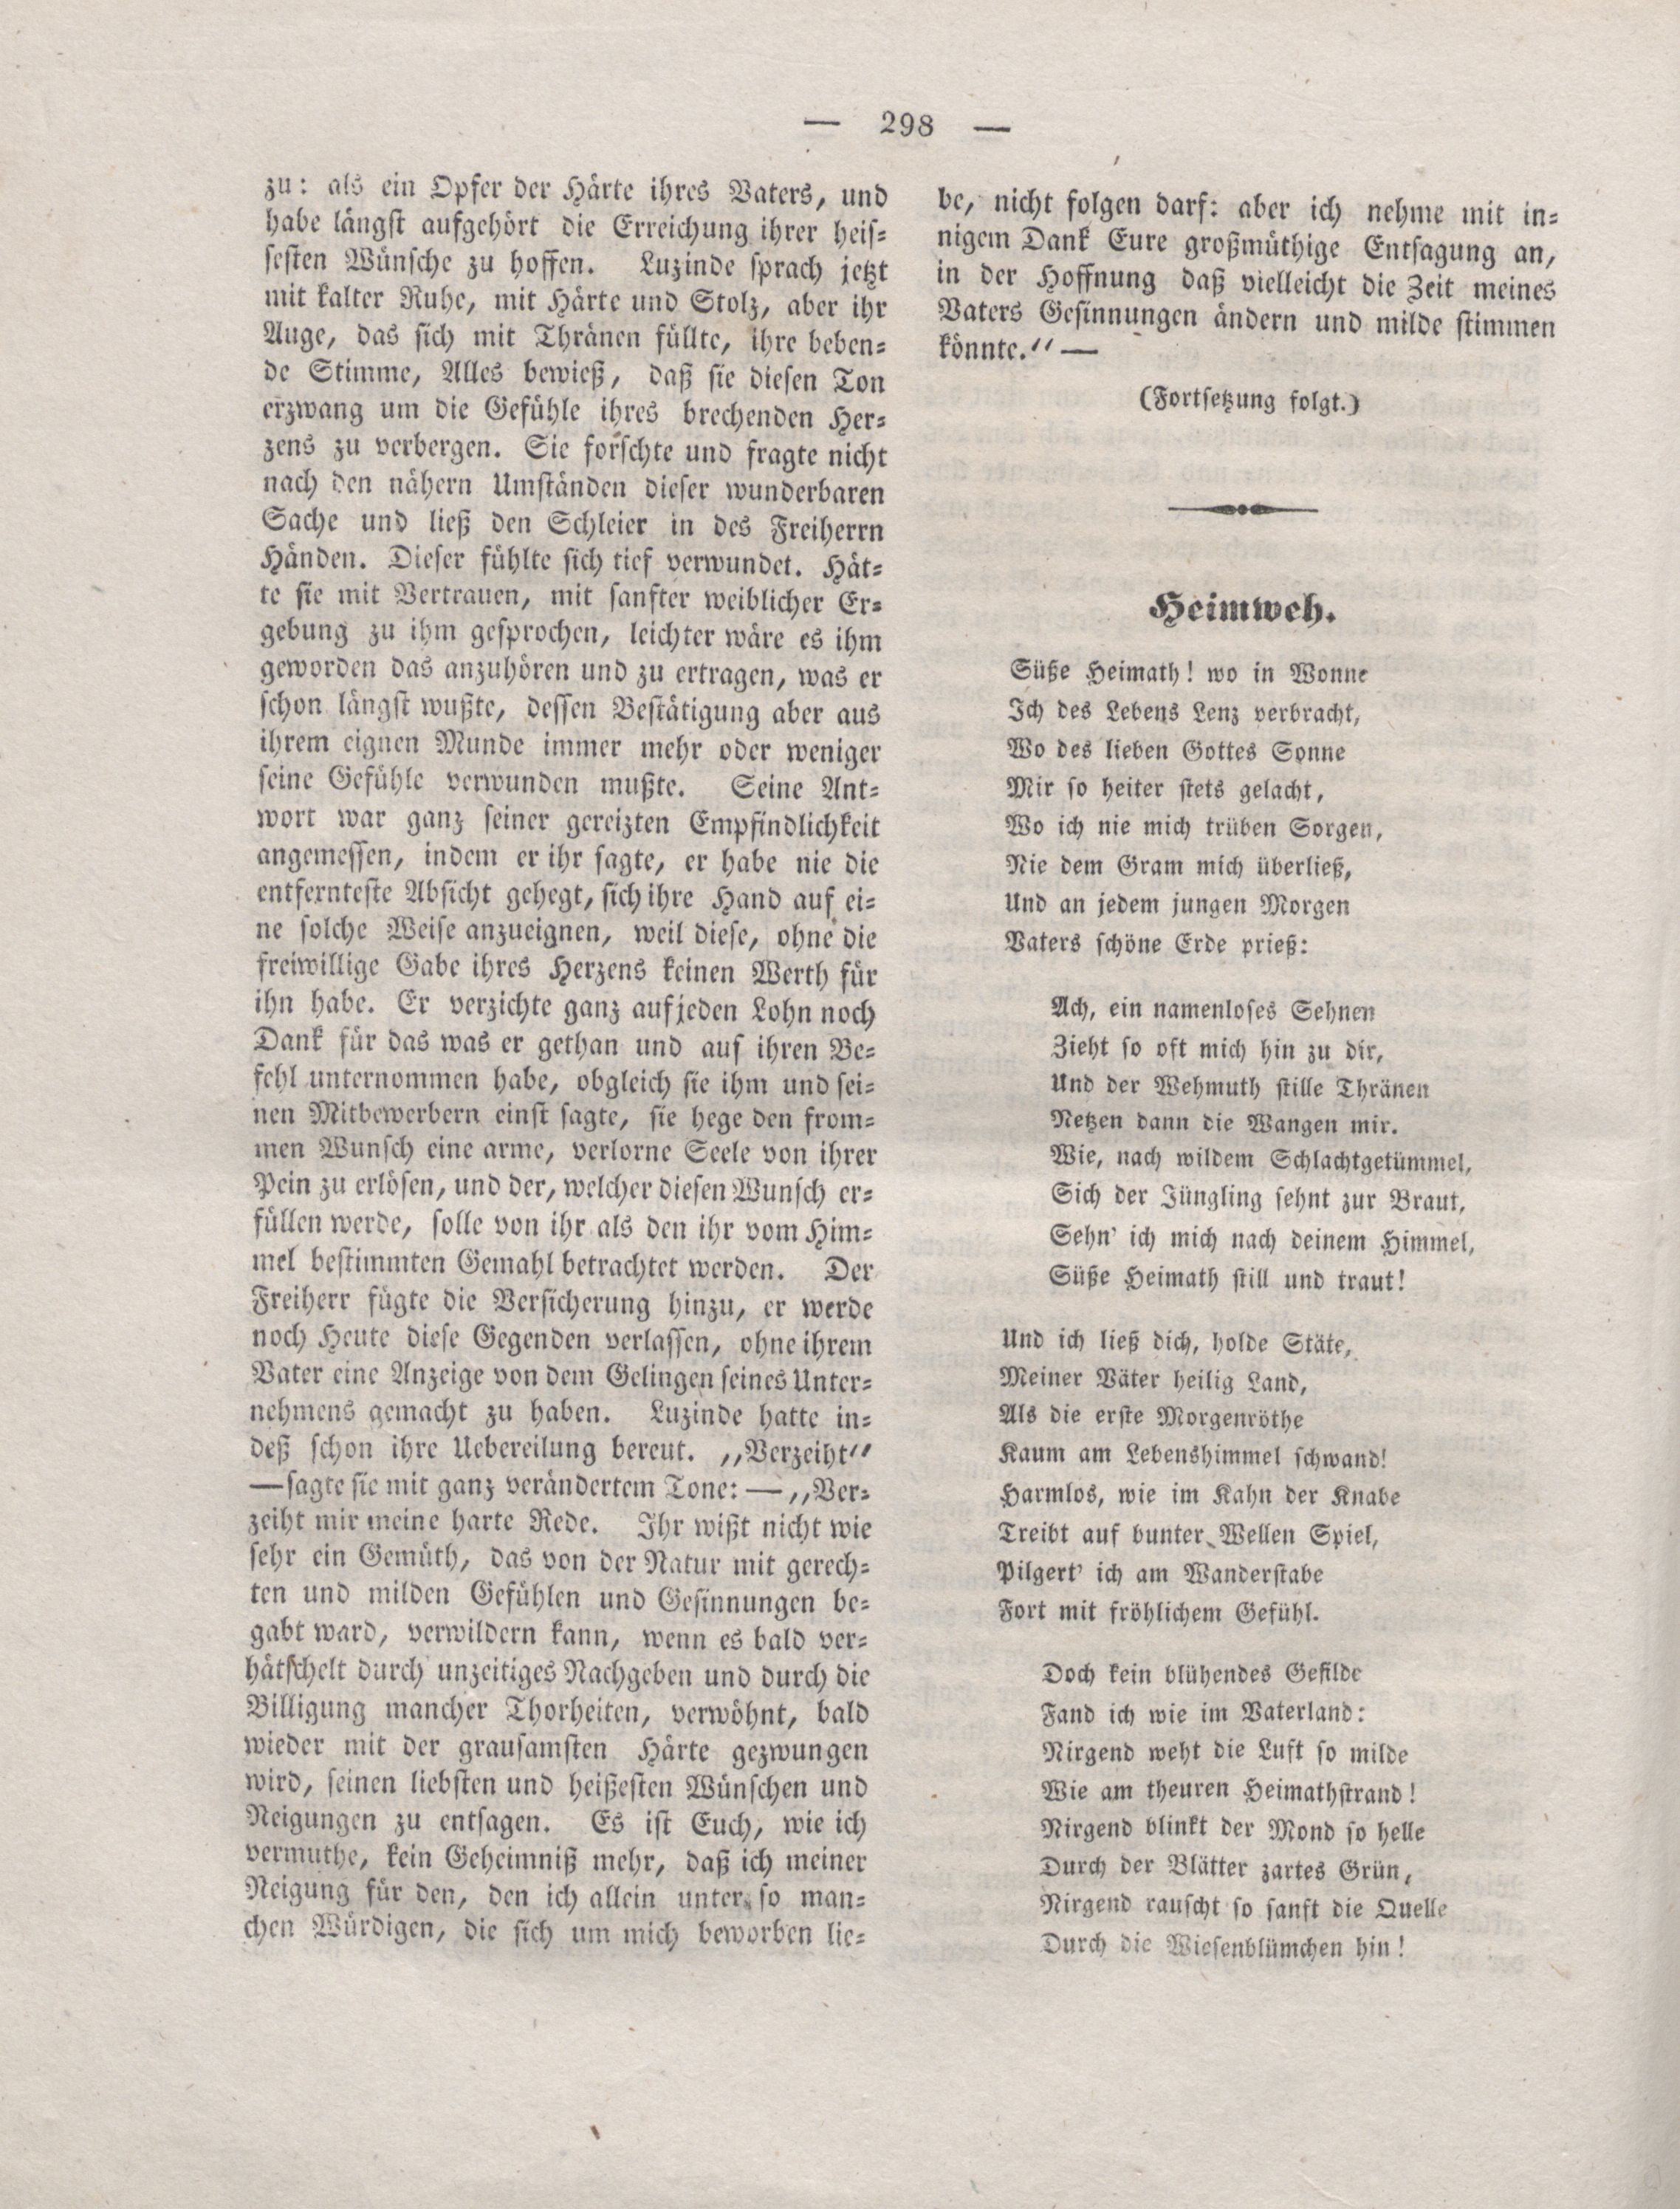 Heimweh (1837) | 1. (298) Основной текст